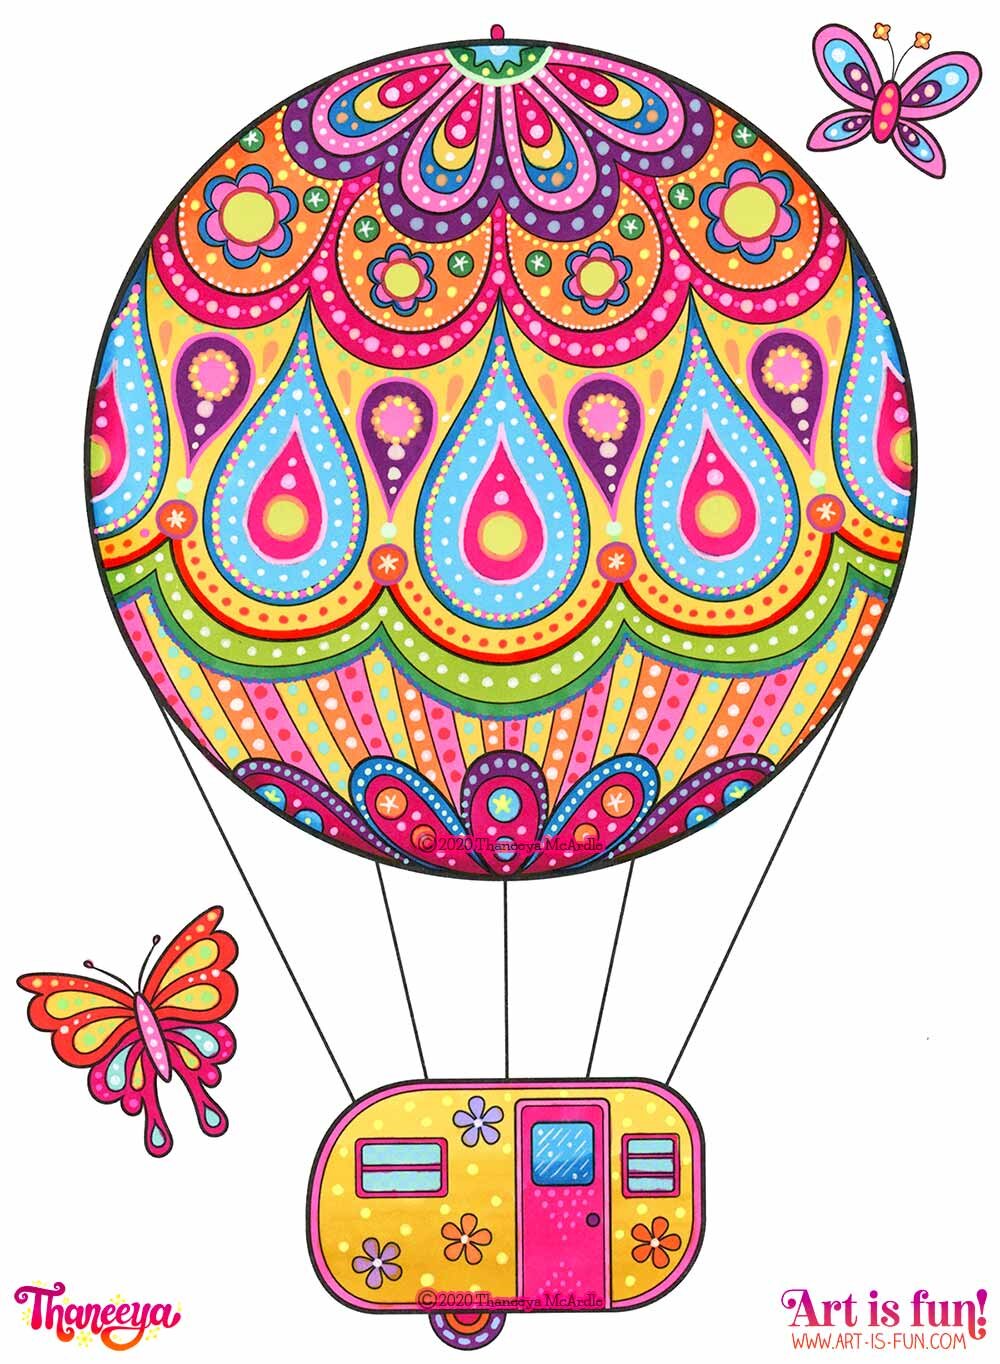 https://images.squarespace-cdn.com/content/v1/5511fc7ce4b0a3782aa9418b/1590772112873-MRM03AR5ELQLBVQN10ZN/Hot-Air-Balloon-Trailer-Coloring-Page-by-Thaneeya-McArdle-1000.jpg